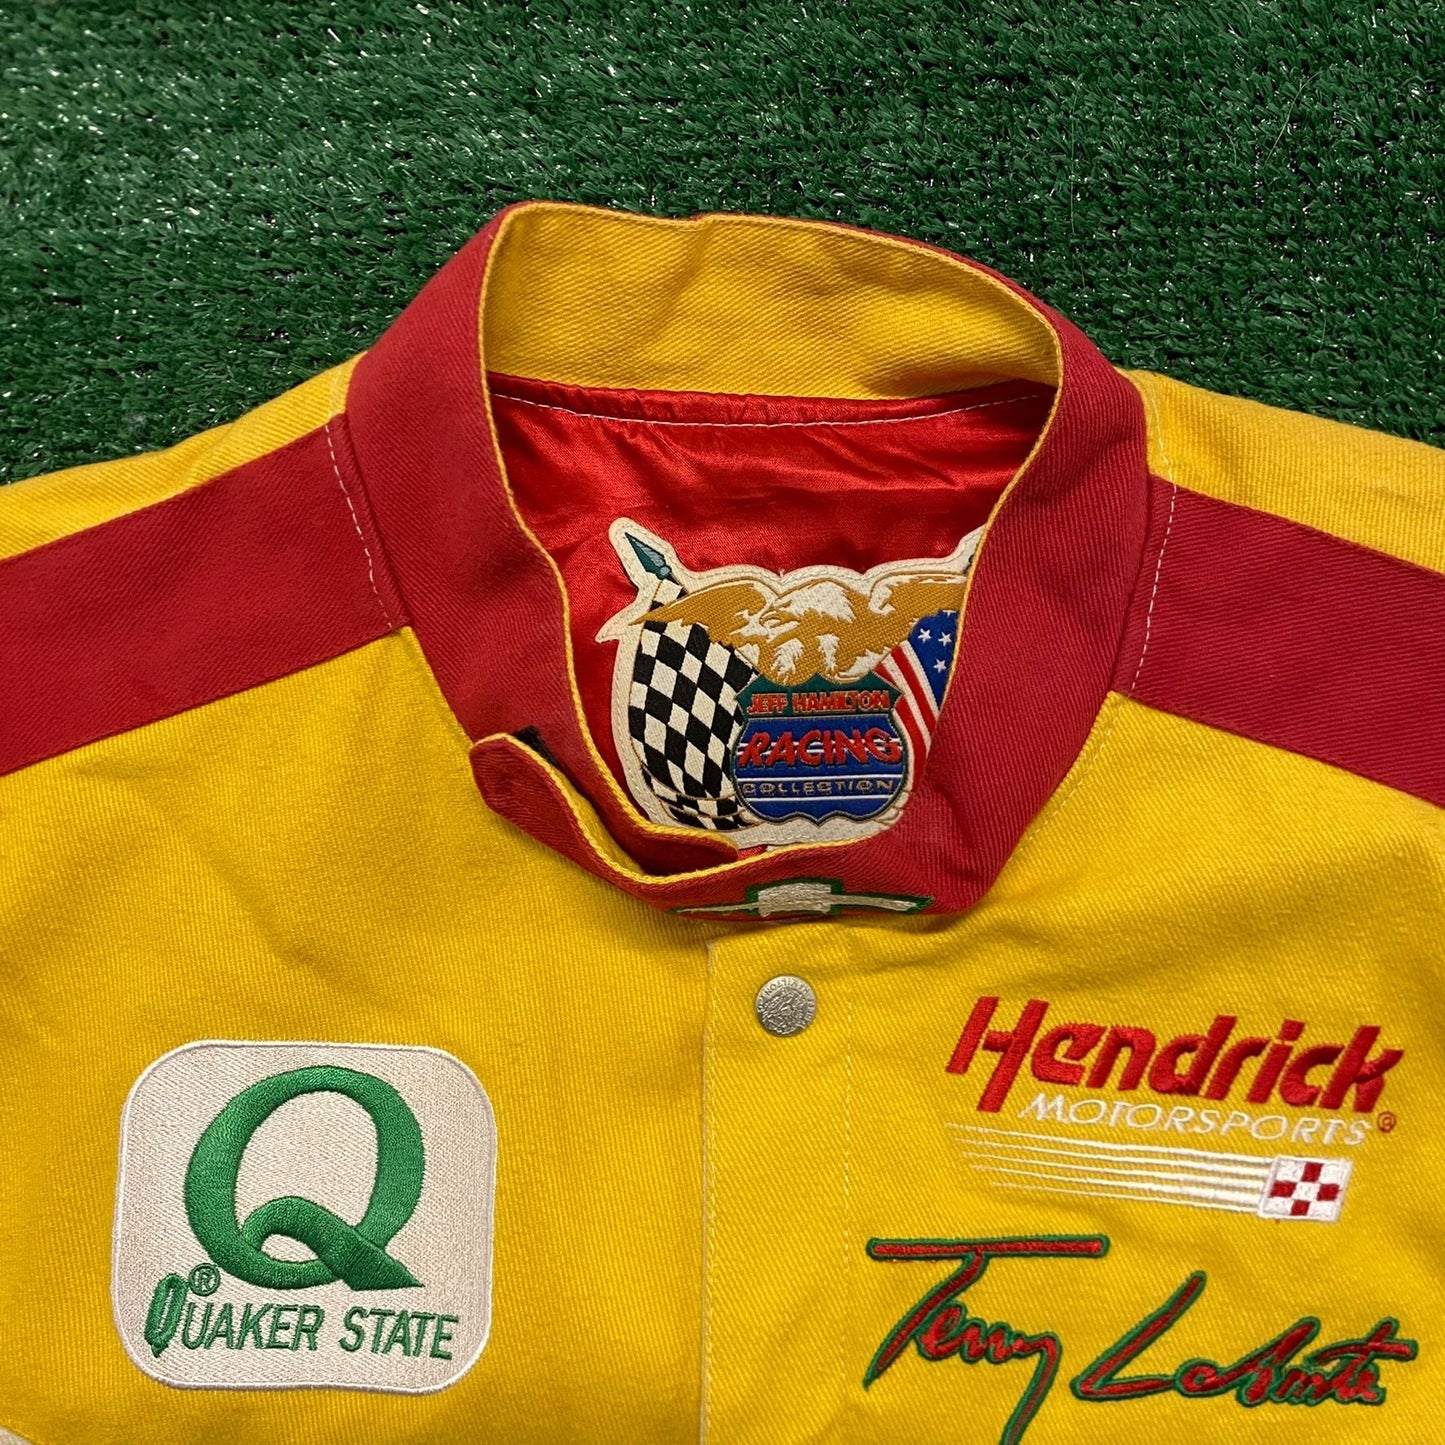 Jeff Hamilton Corn Flakes Vintage NASCAR Racing Jacket